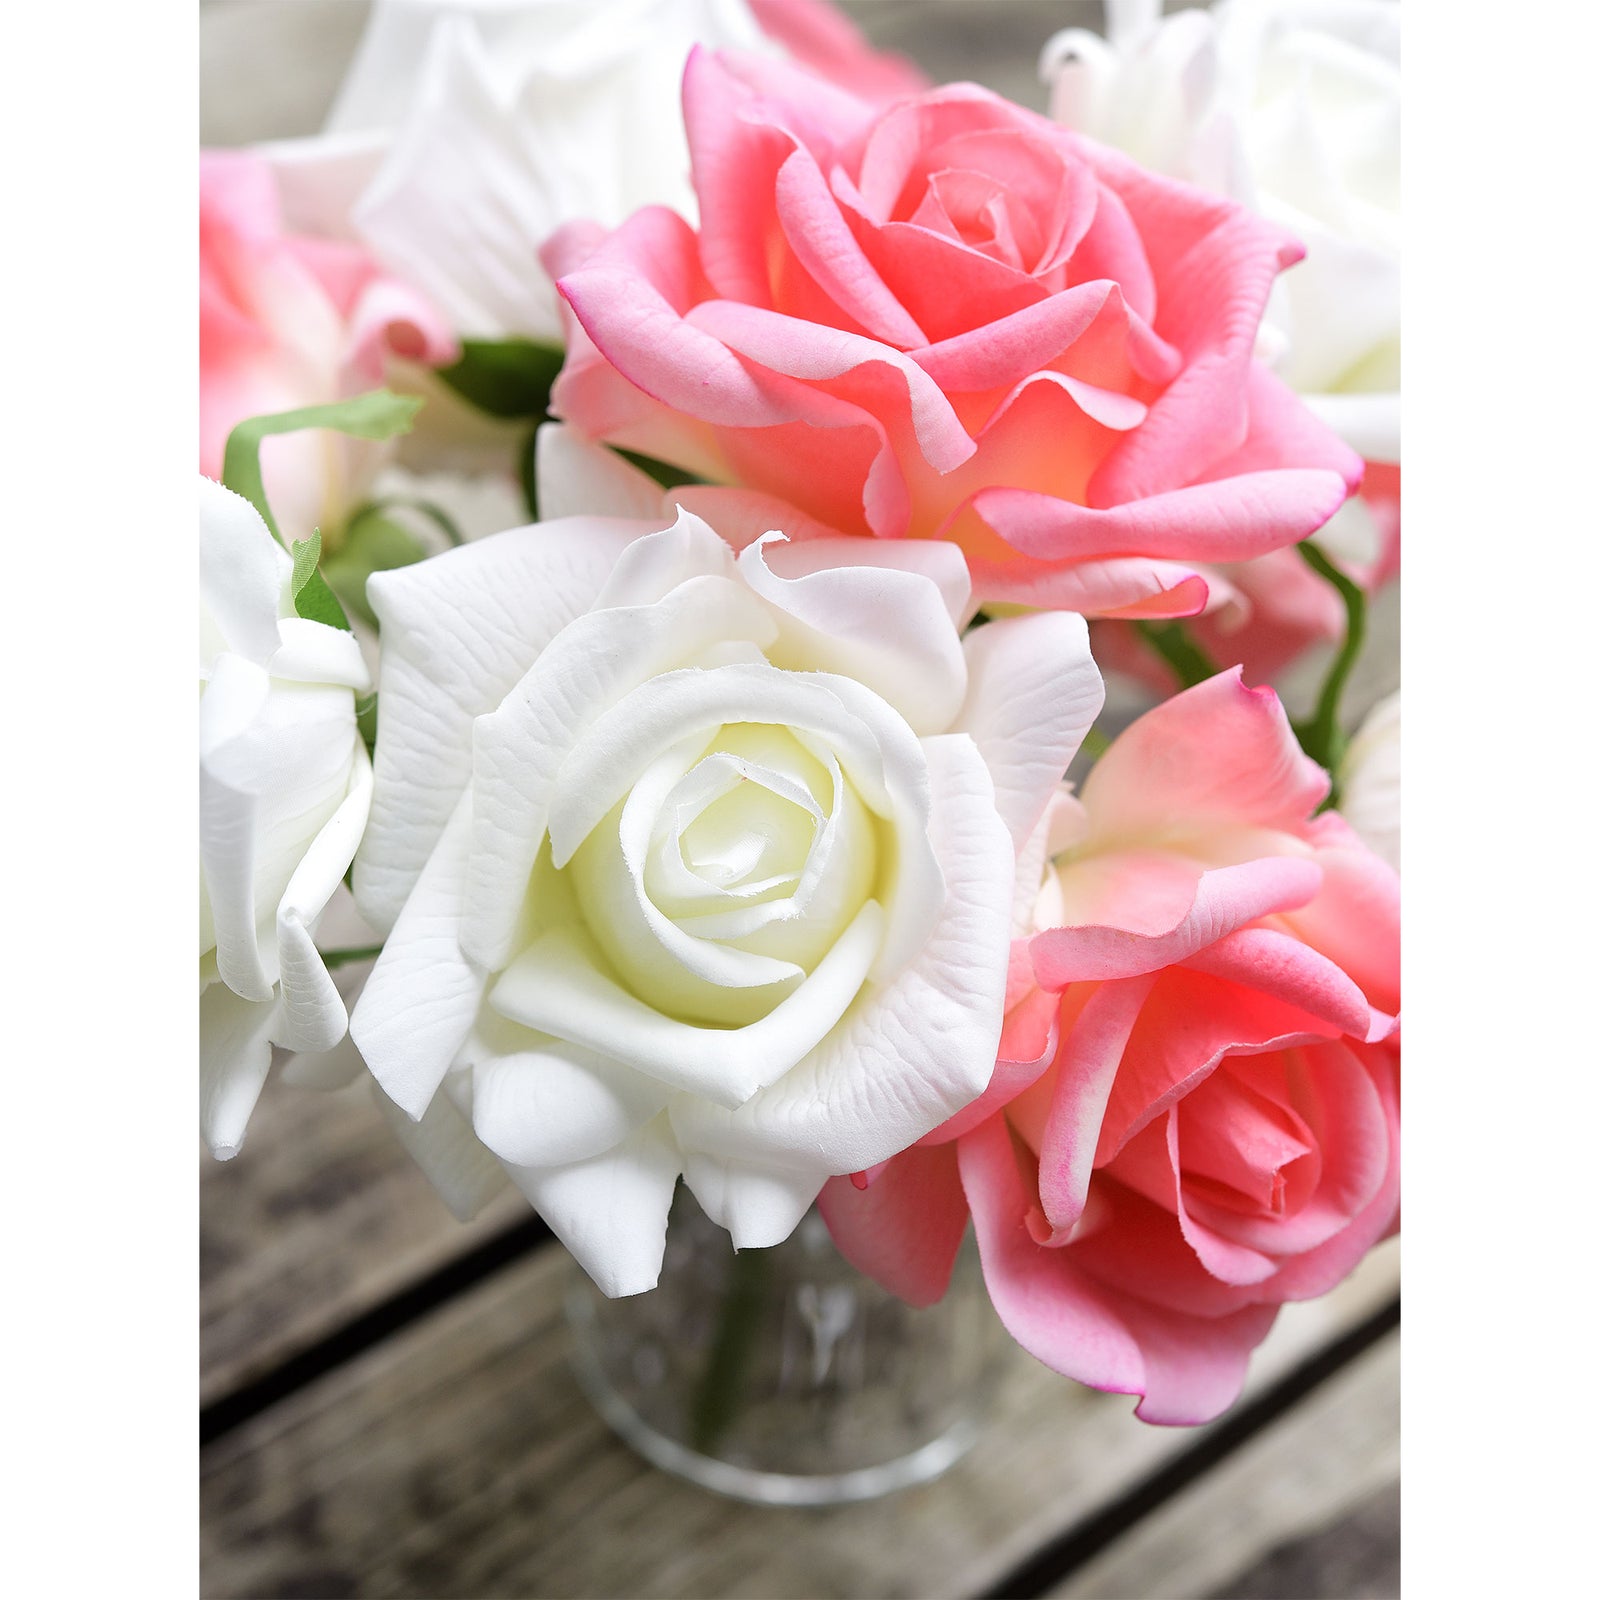 FiveSeasonStuff Milk White Real Touch Garden Rose Artificial Flowers Wedding, Bridal, Home Décor 5 Stems 9.8"